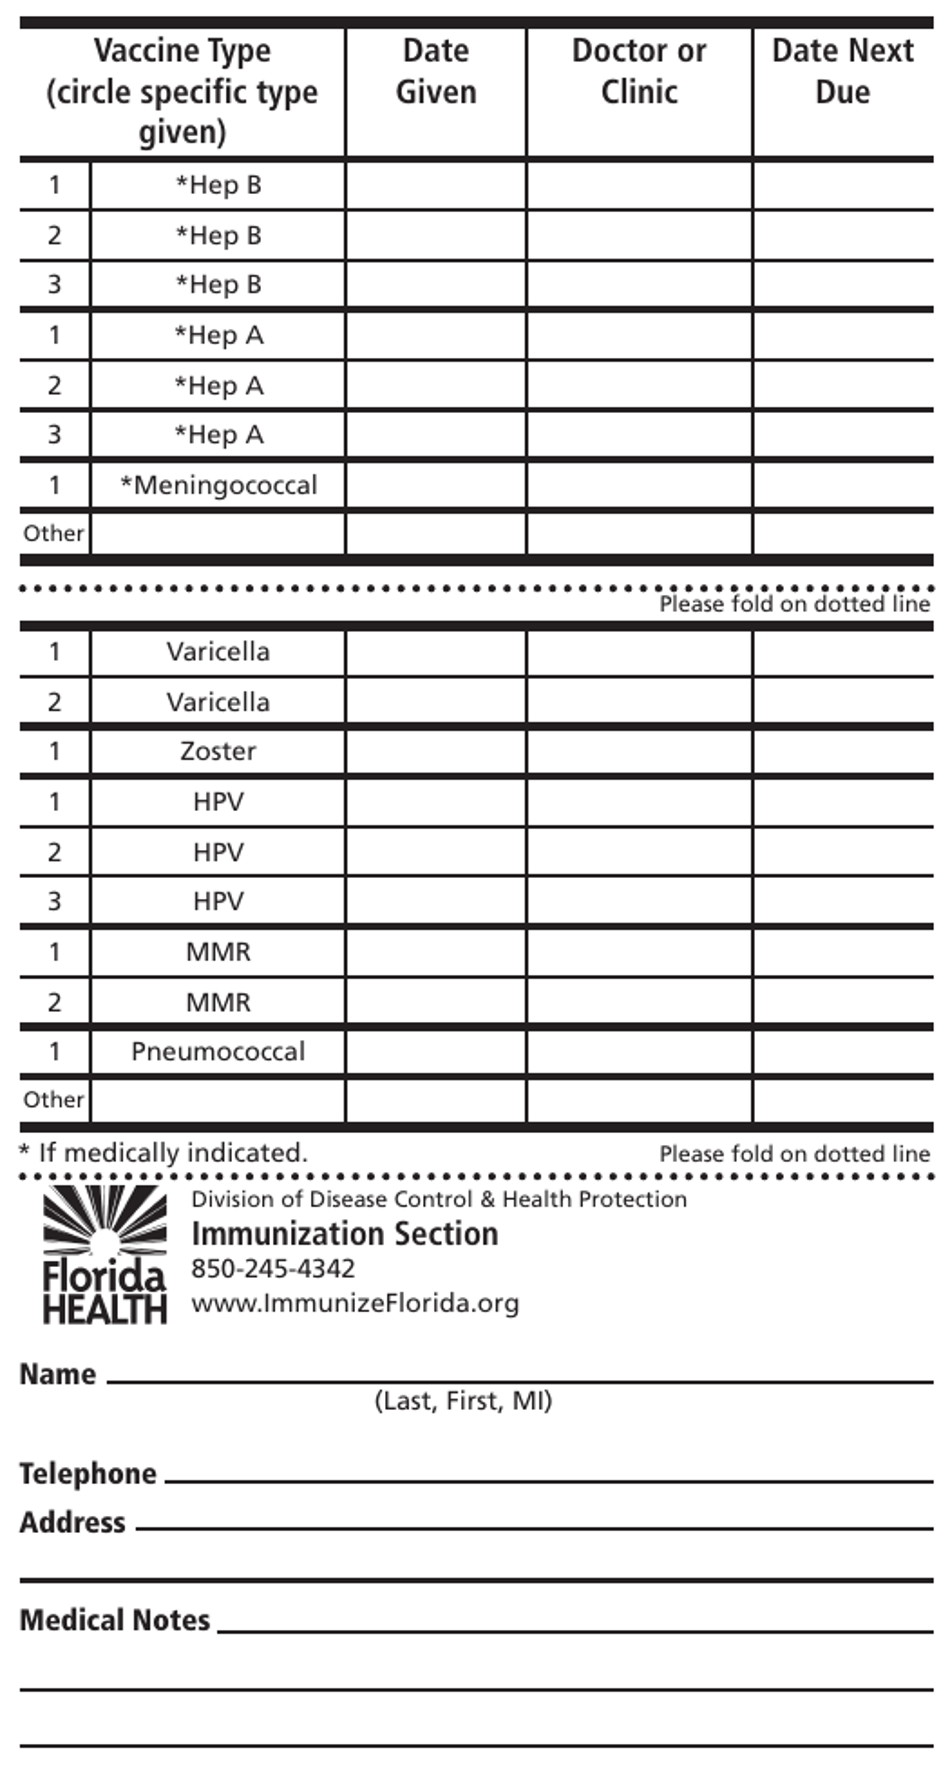 Form DH686 Immunization Record - Florida, Page 1